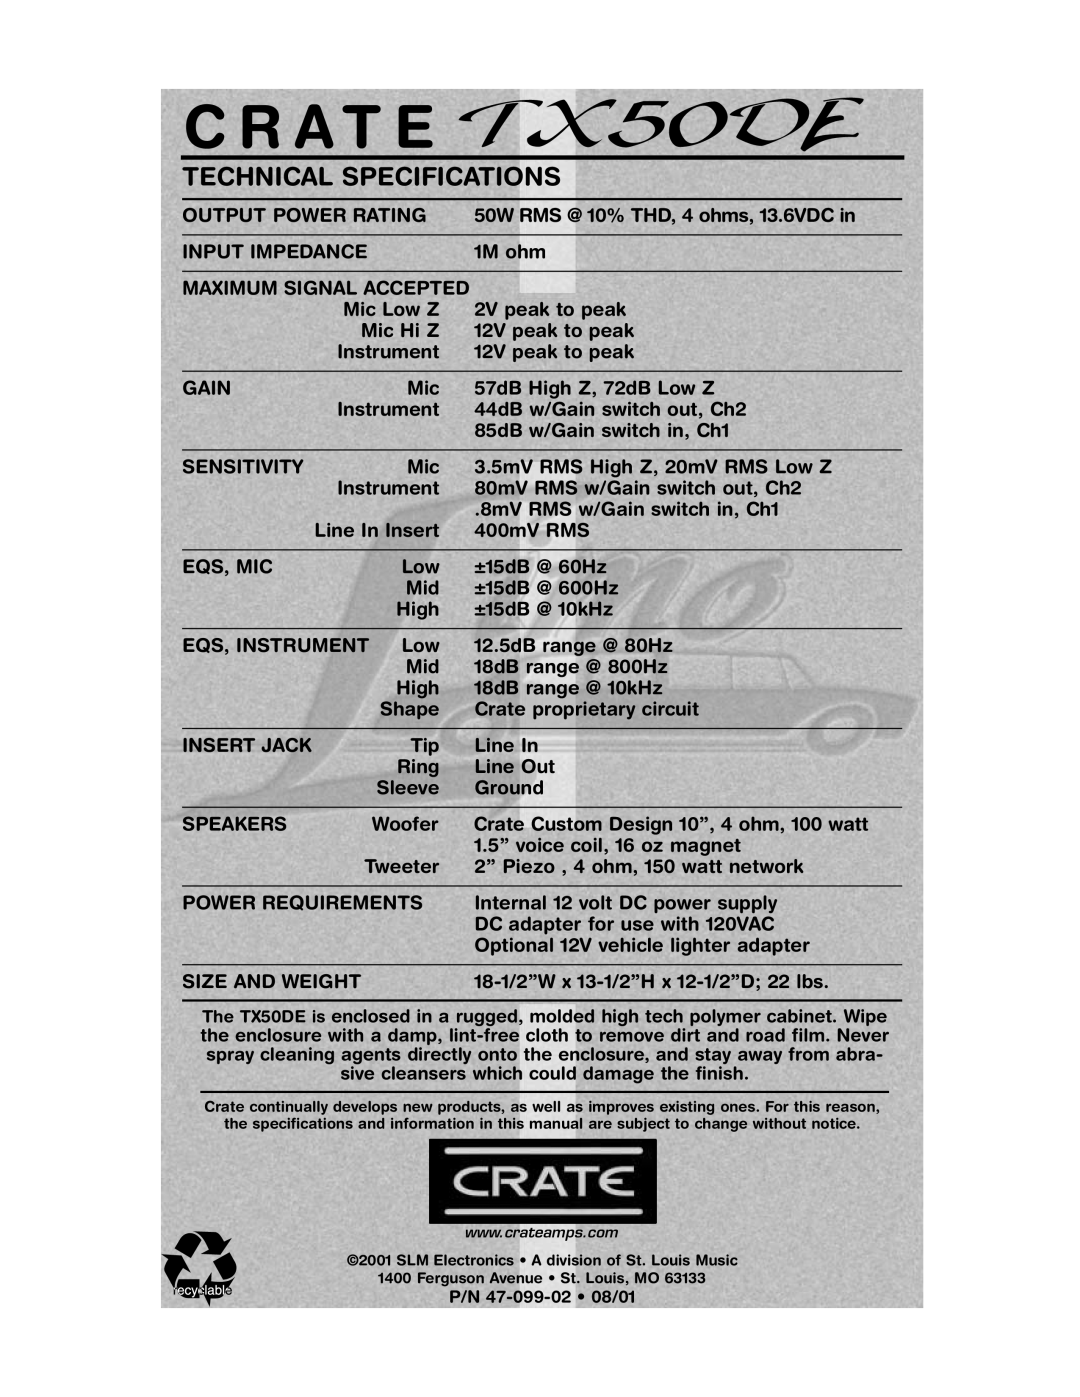 Crate Amplifiers TX50DE manual Technical Specifications, C R A T E 